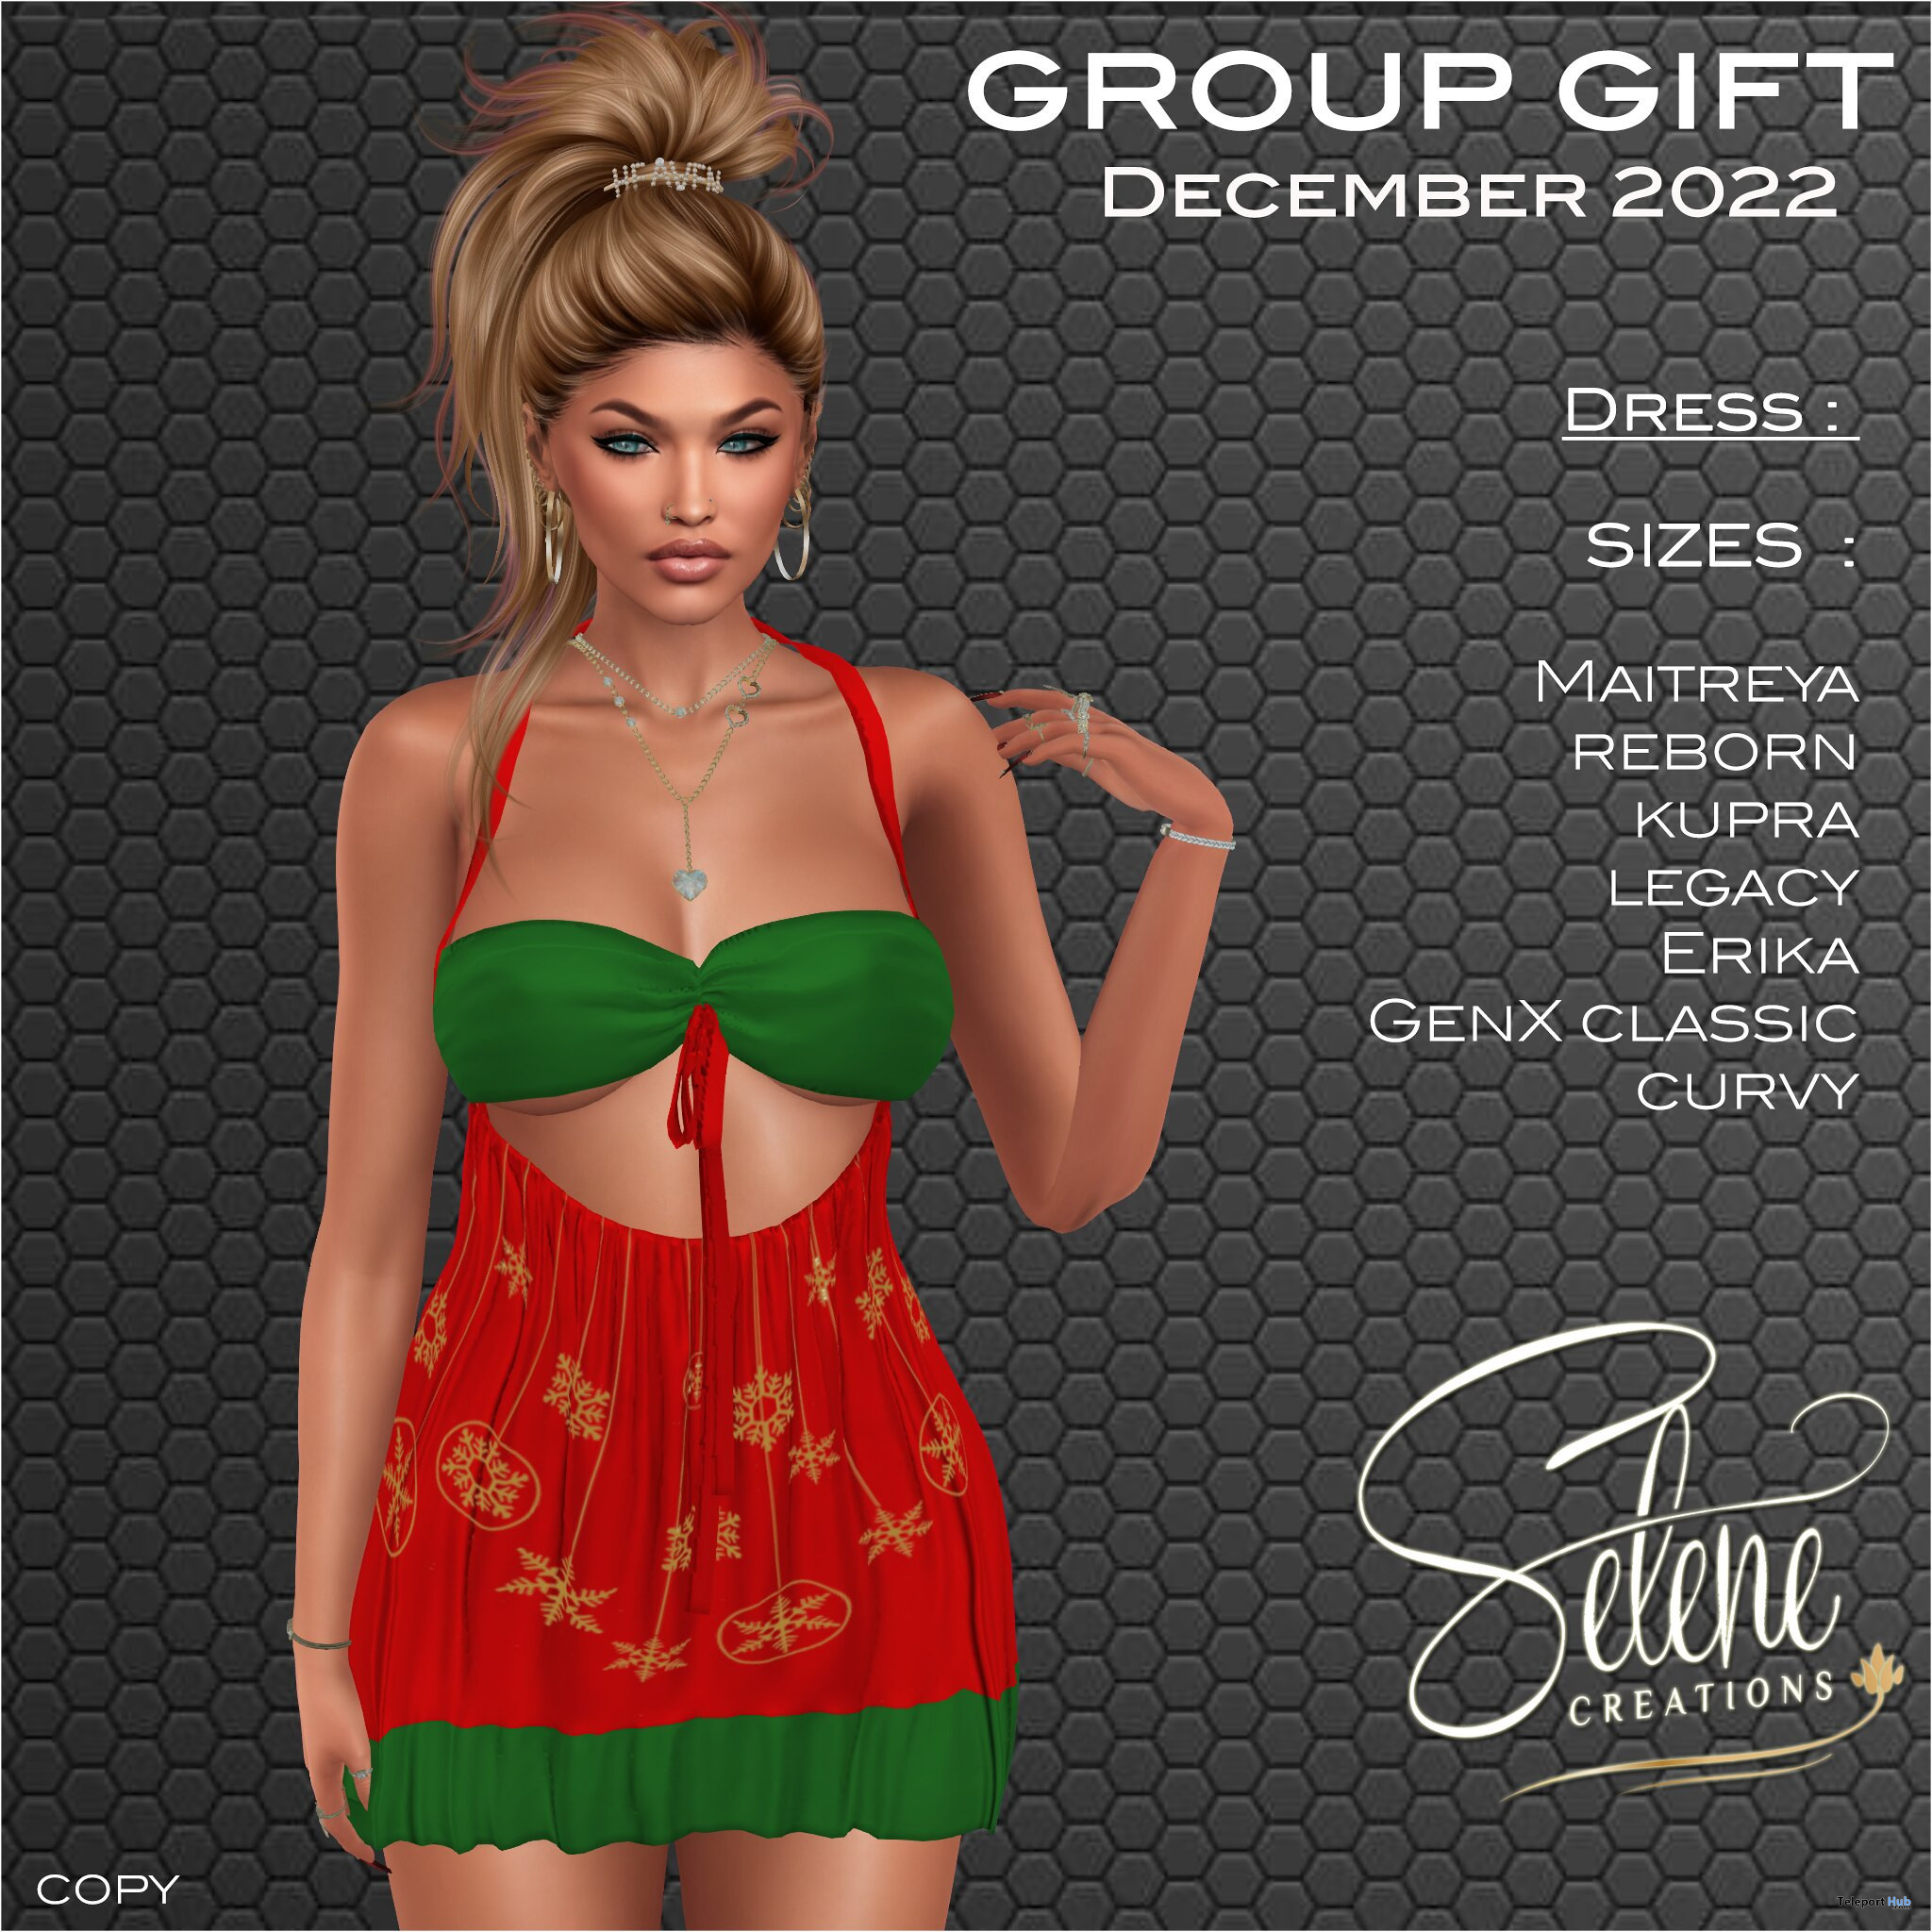 Xmas Mini Dress December 2022 Group Gift by Selene Creations - Teleport Hub - teleporthub.com